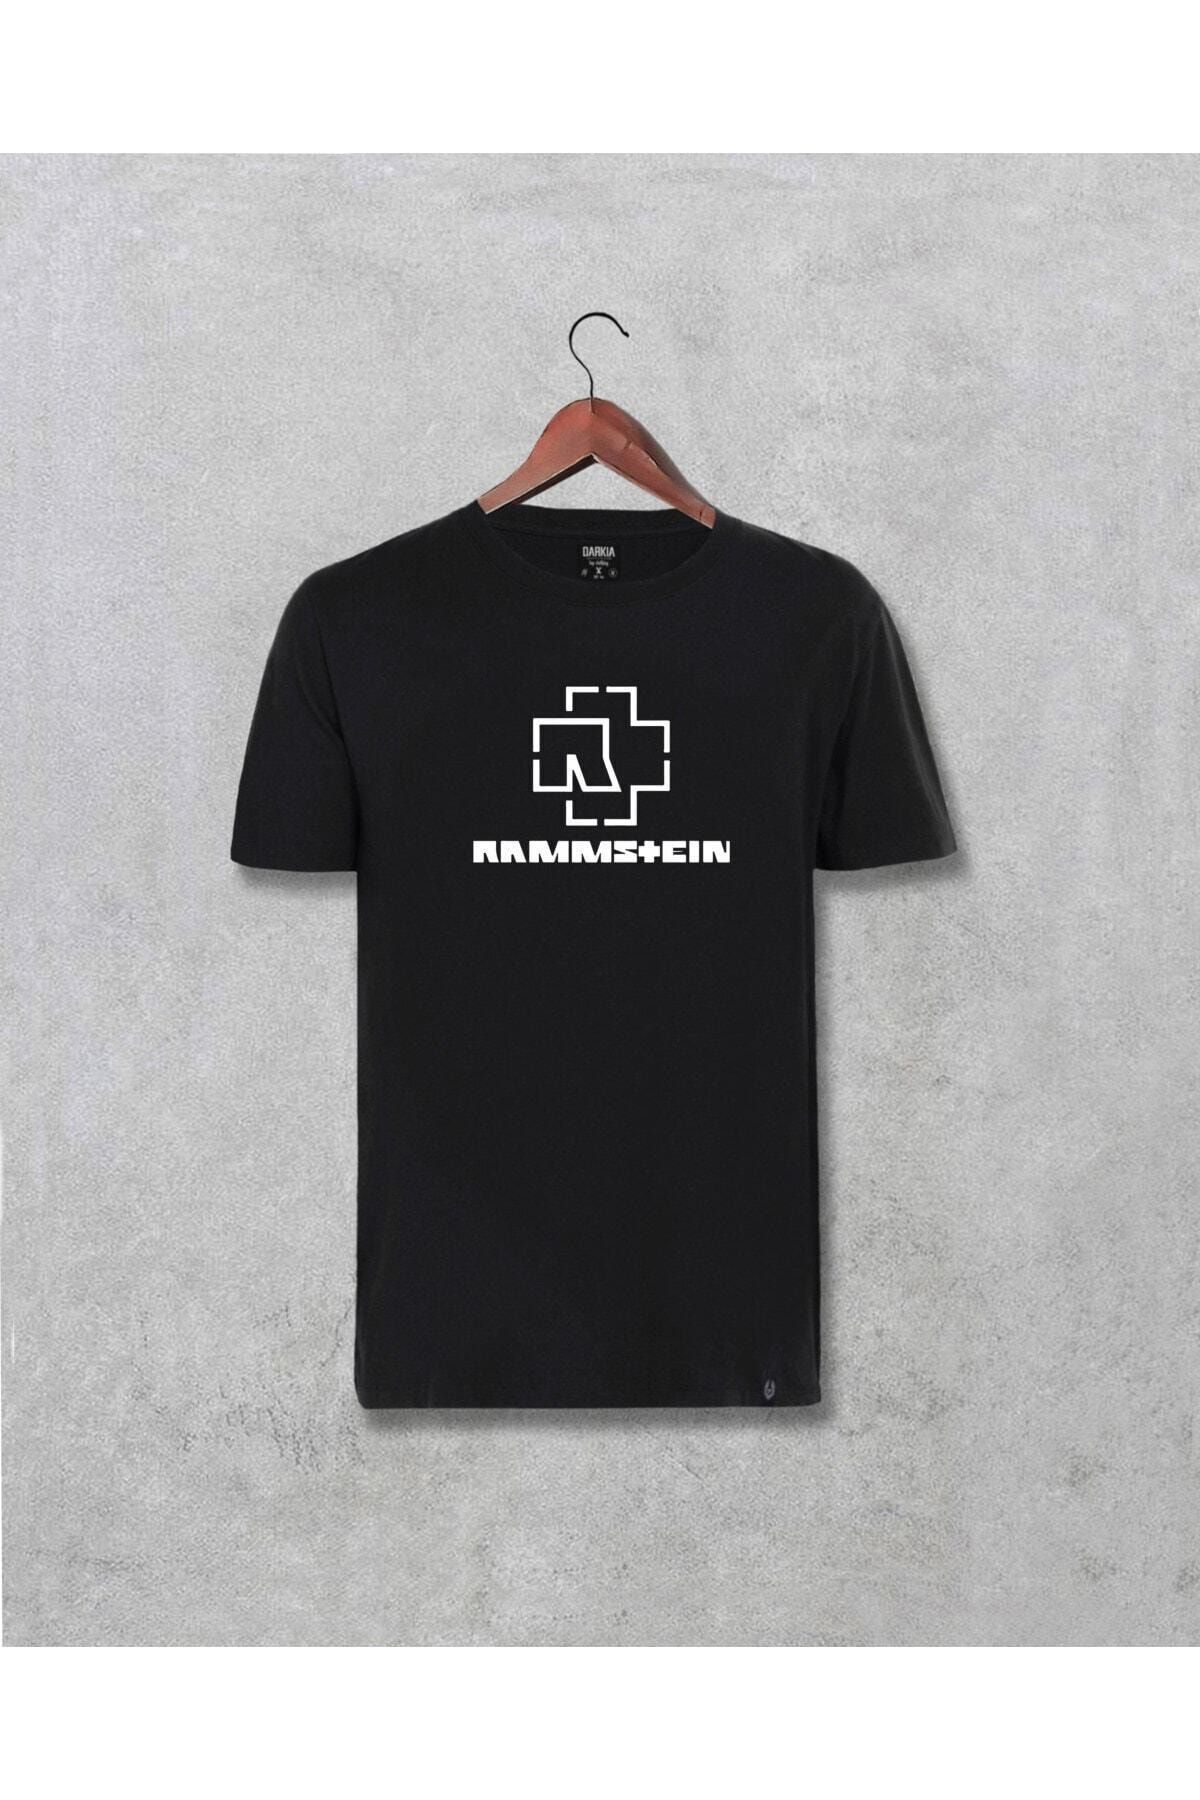 Darkia Unisex Siyah Rammstein Logo Baskılı T-Shirt